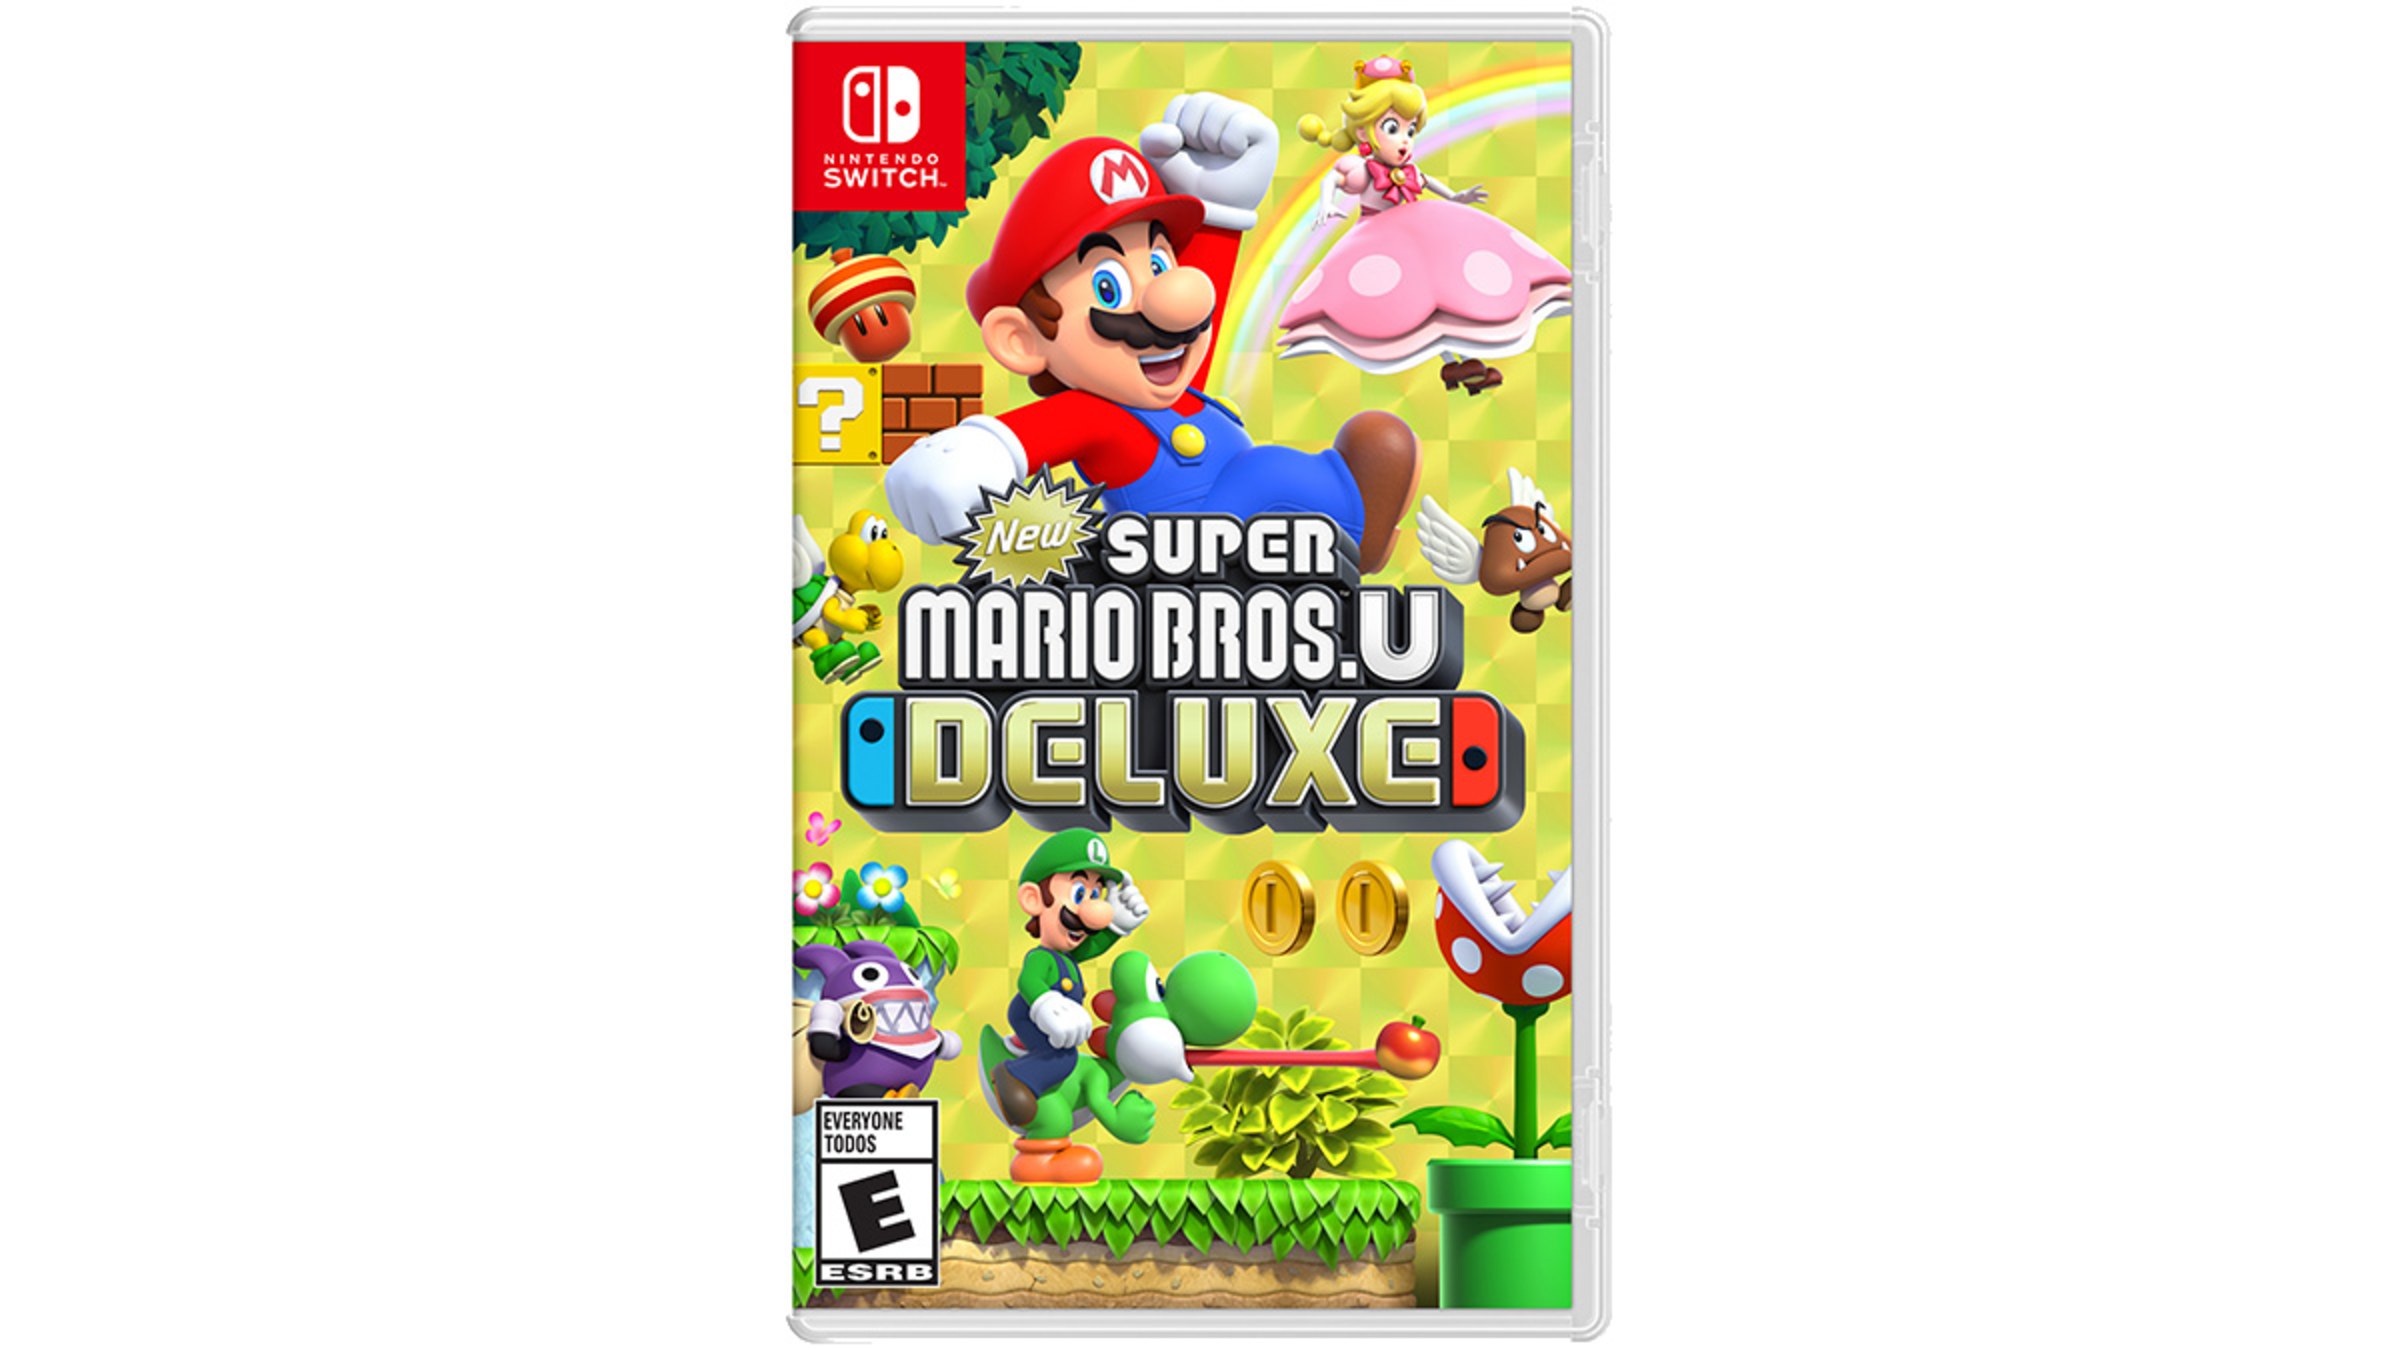 lb Executable feasible New Super Mario Bros. U Deluxe for Nintendo Switch - Nintendo Official Site